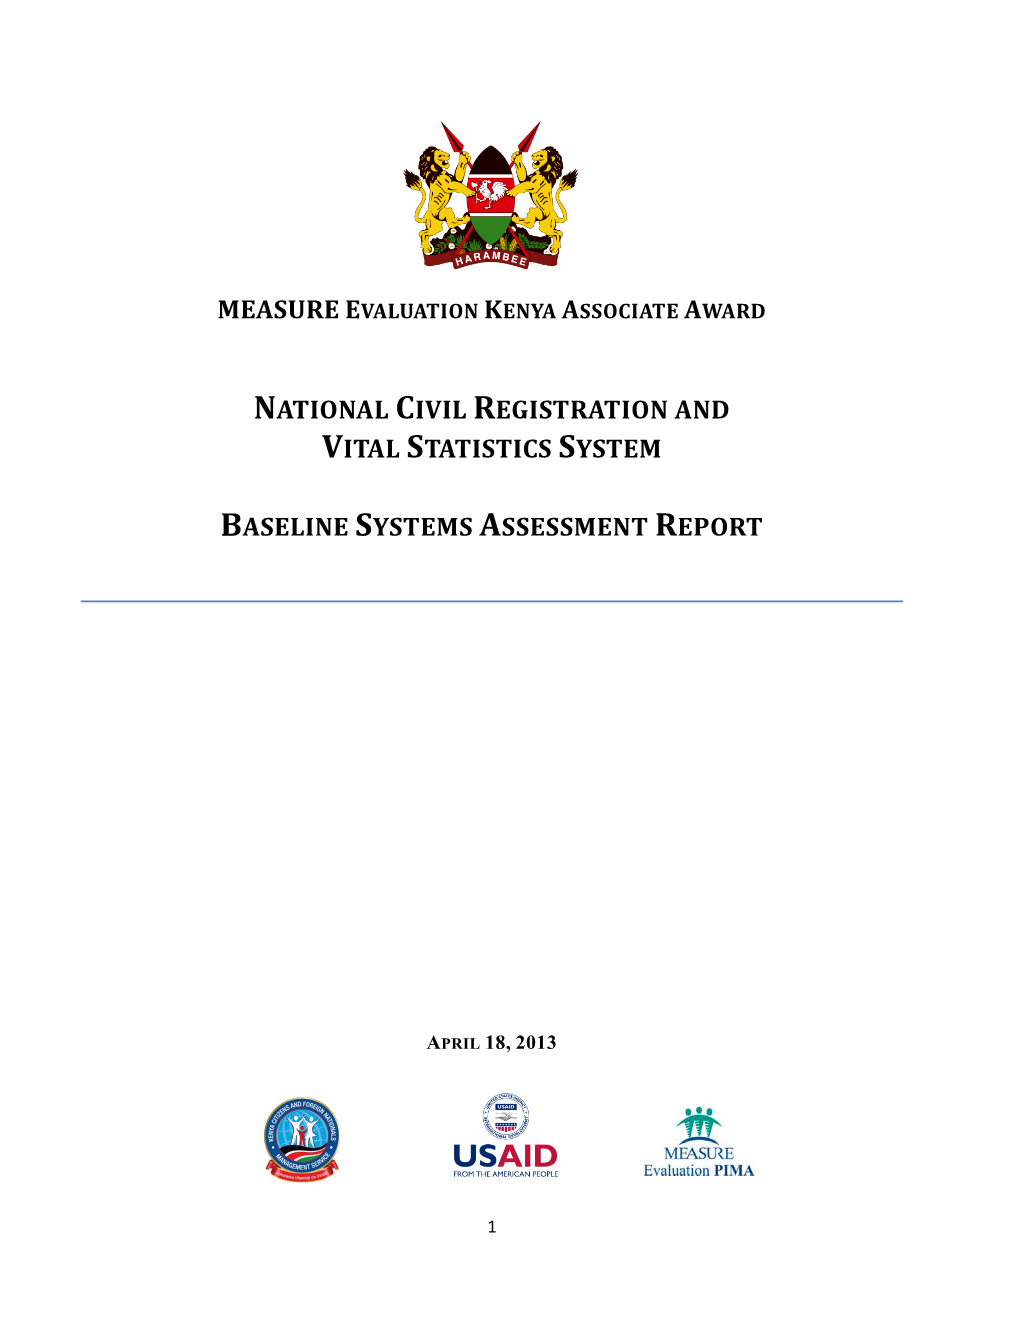 National Civil Registration and Vital Statistics System